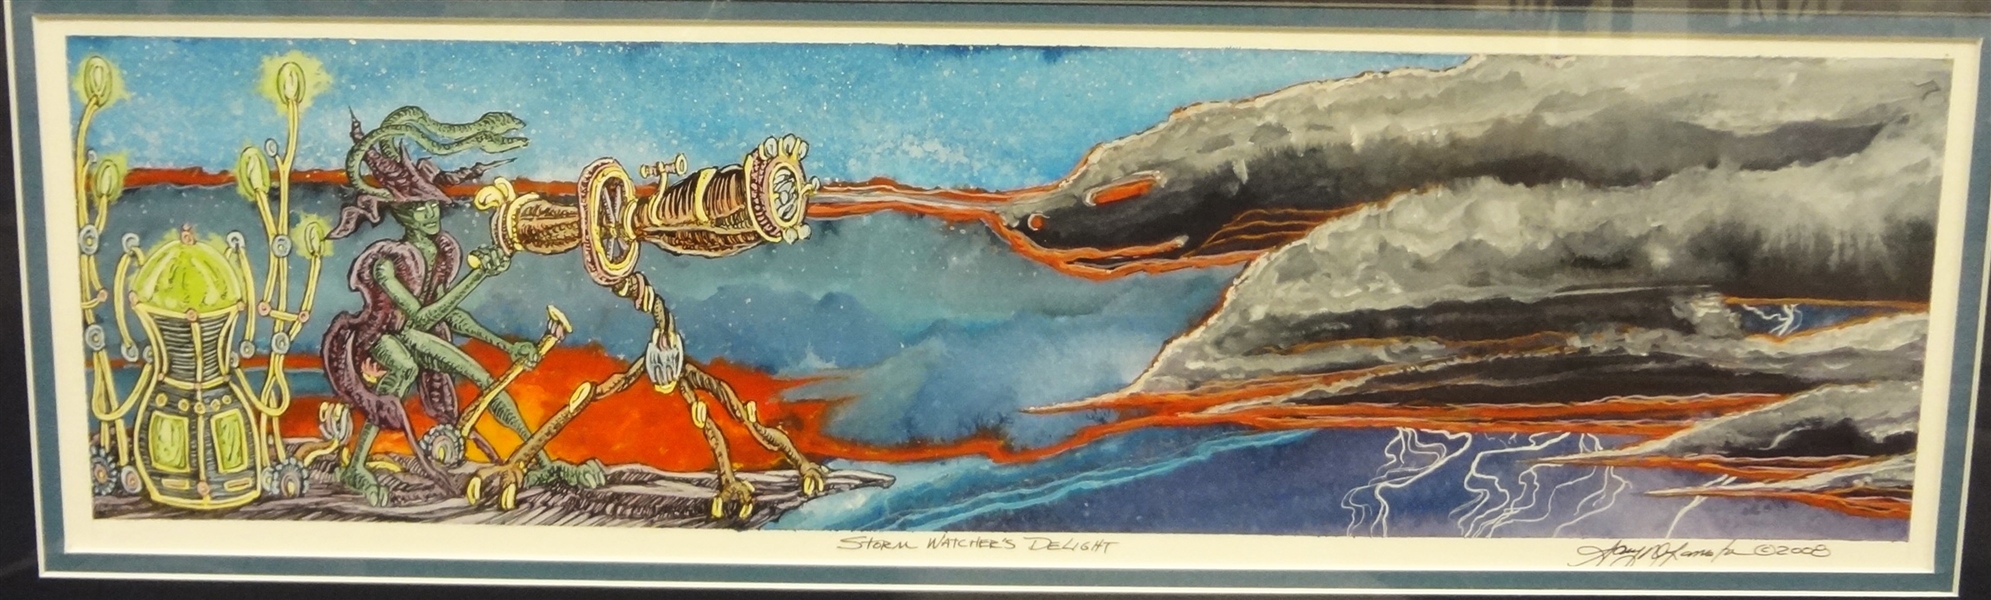 Gary DeLamatre Watercolors: "Storm Watchers Delight, Shroomfield of Dreams"